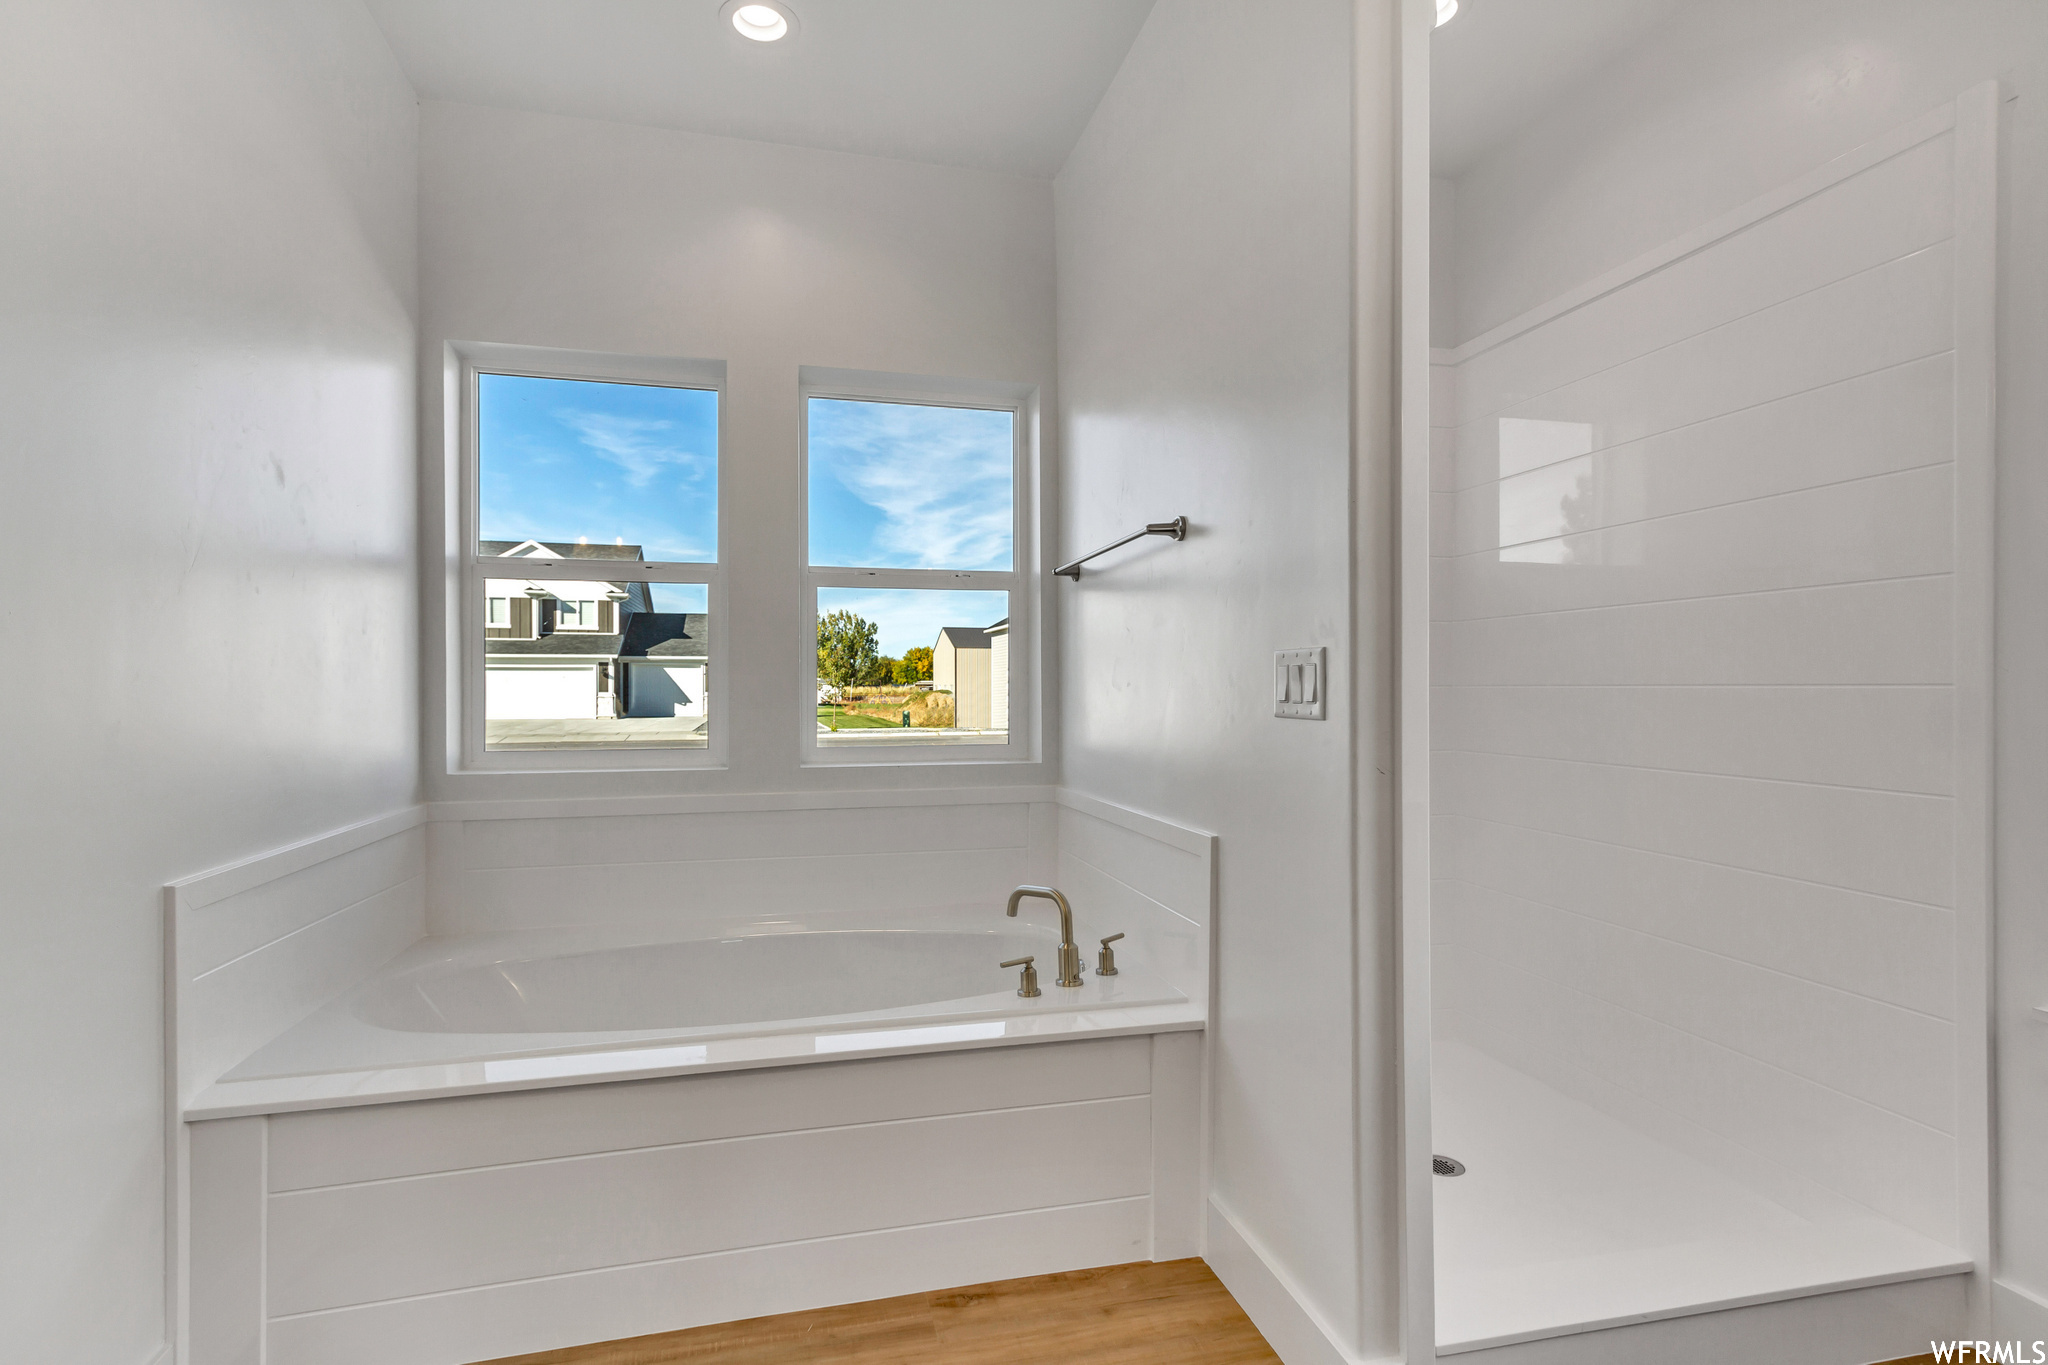 Bathroom with wood-type flooring and a bathtub